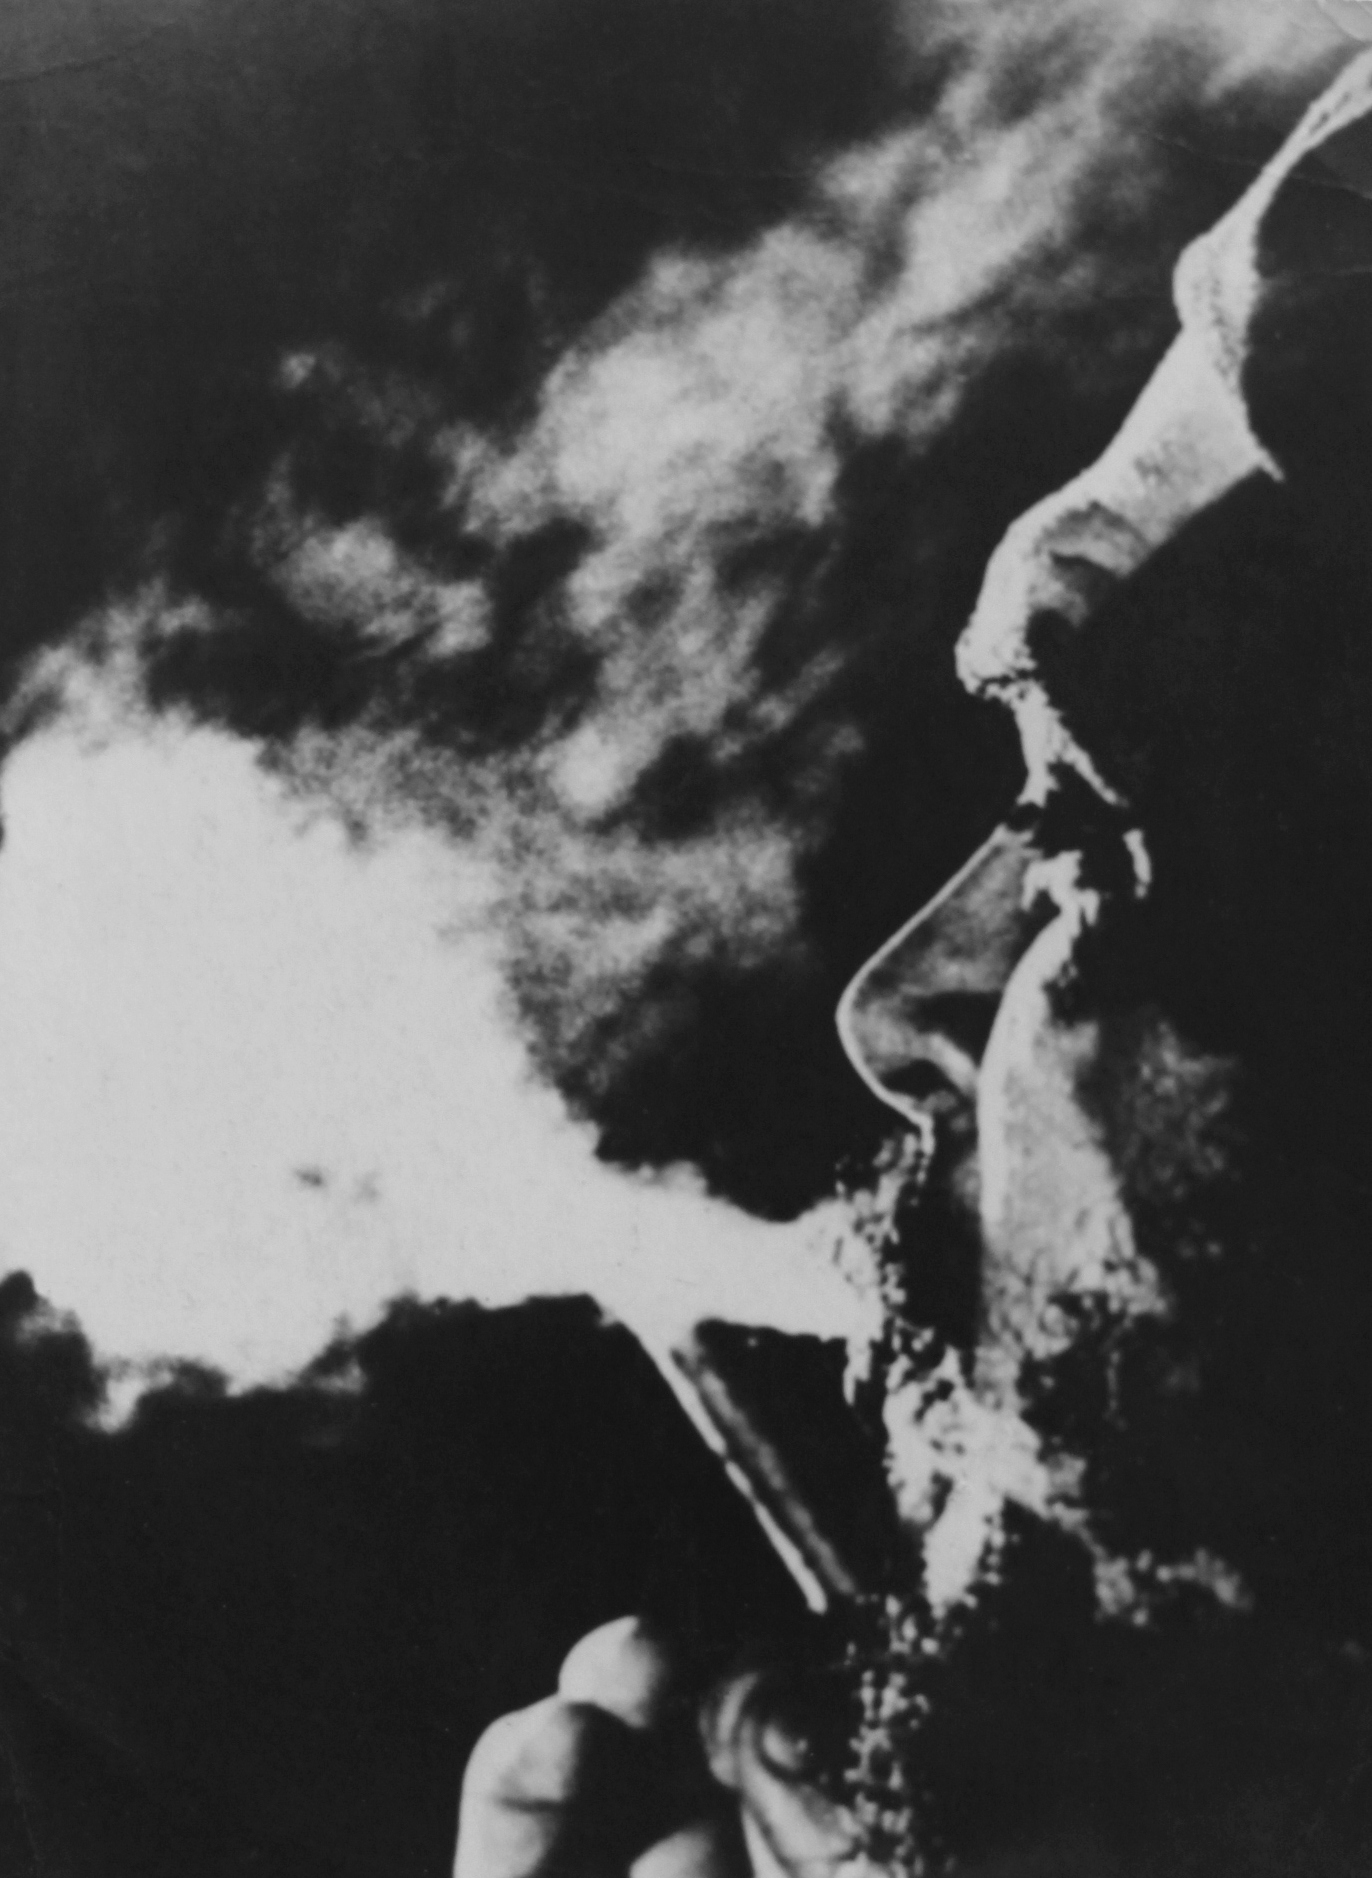 Osvaldo Salas, Che blowing smoke, Santiago de Cuba, July 26, 1964
Vintage gelatin silver print
23 x 18 cm
